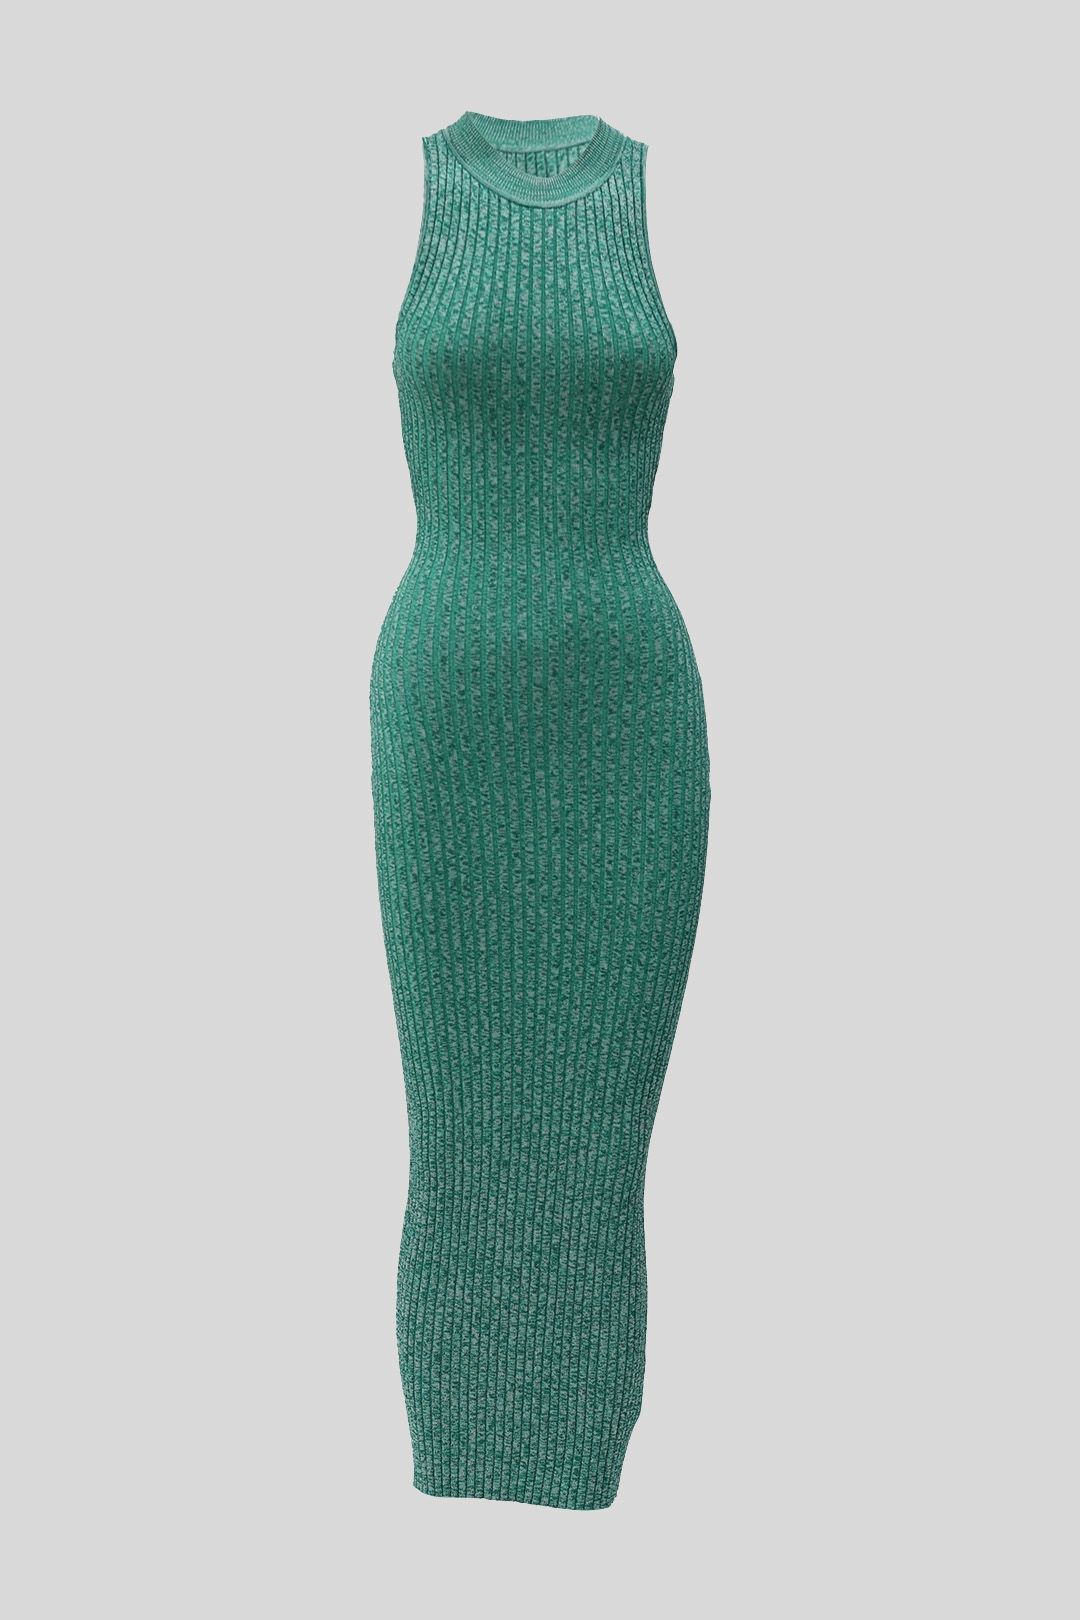 Kookai Bianca Emerald Marle Racer Dress